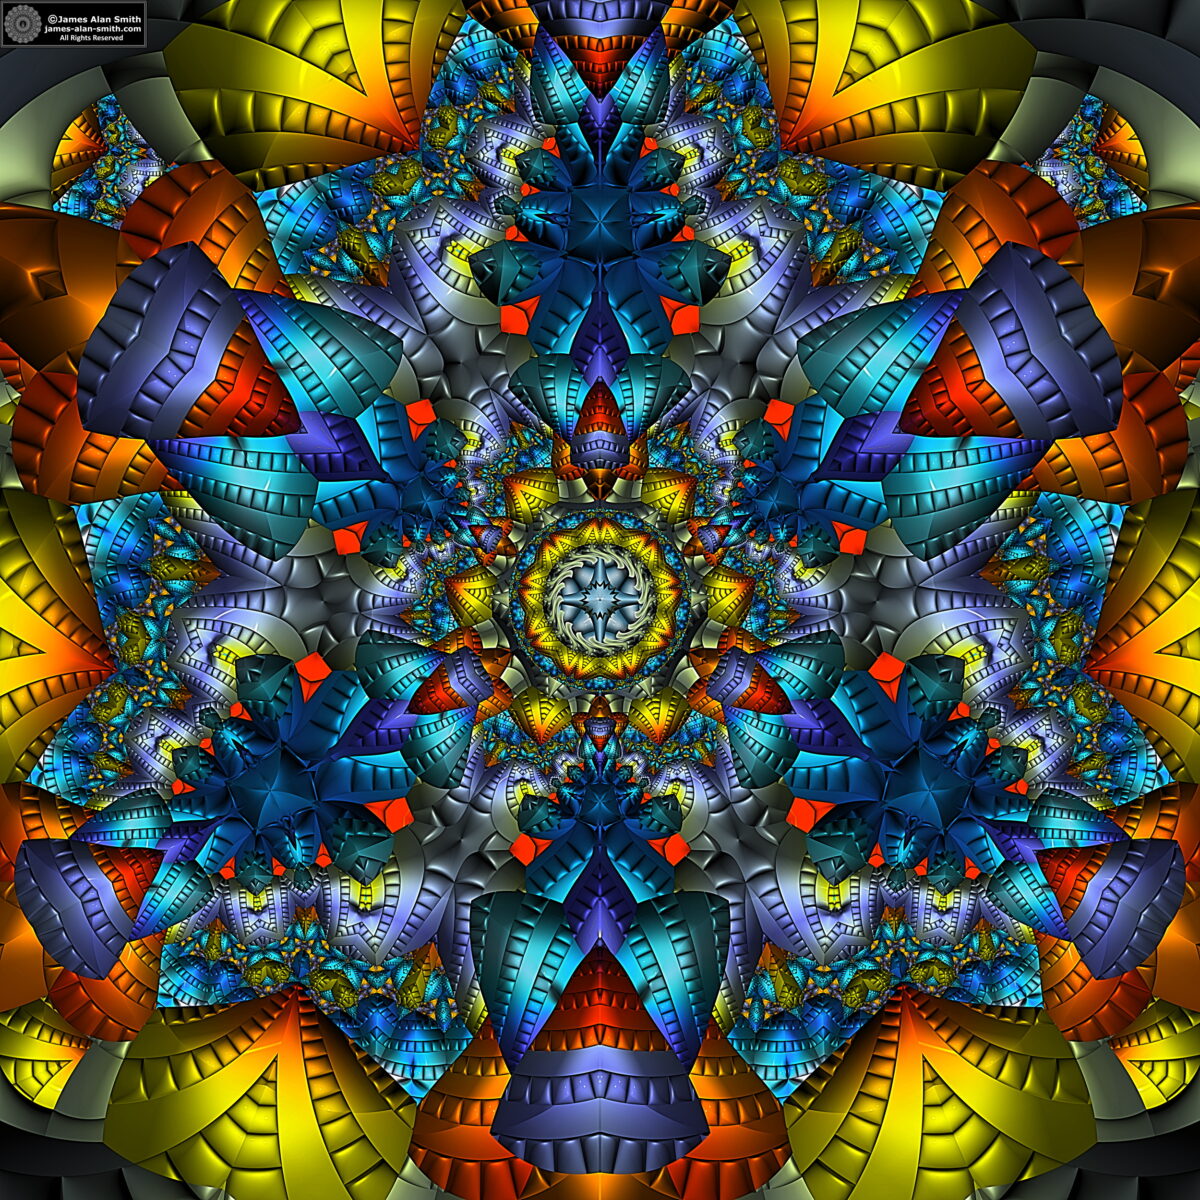 Omniscient Geometric Creation: Artwork by James Alan Smith